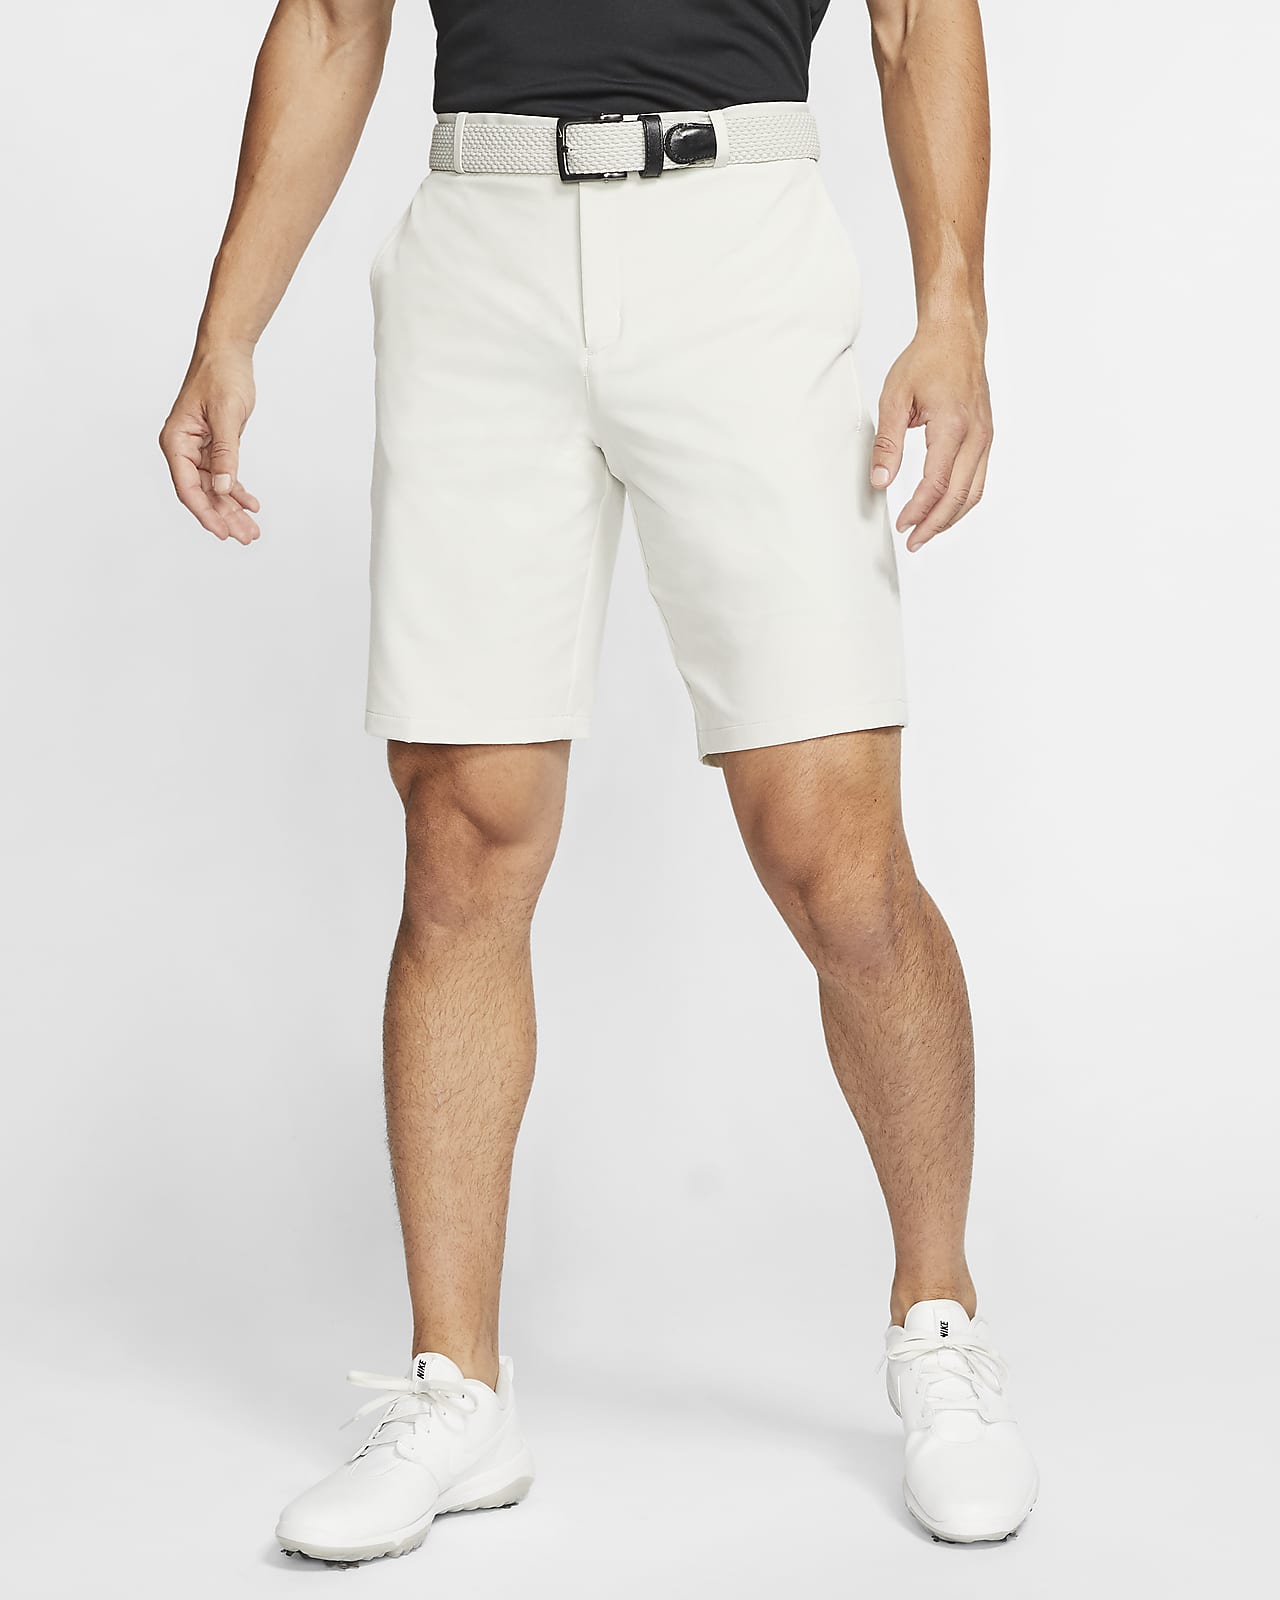 men's golf shorts nike flex